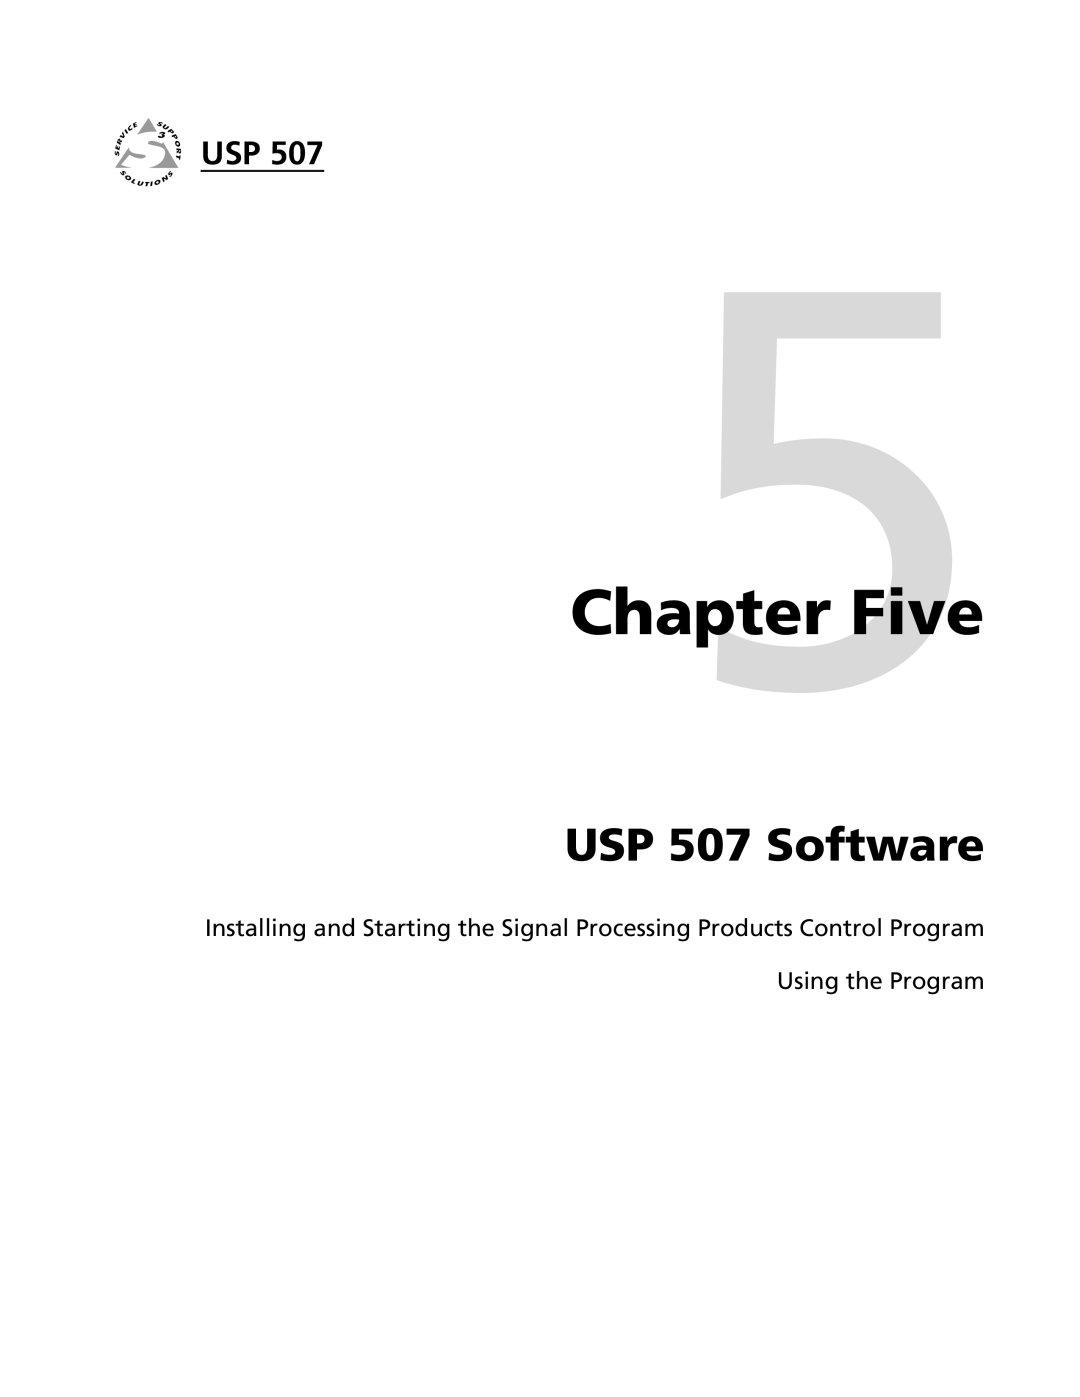 Extron electronic manual Five, USP 507 Software, Using the Program 